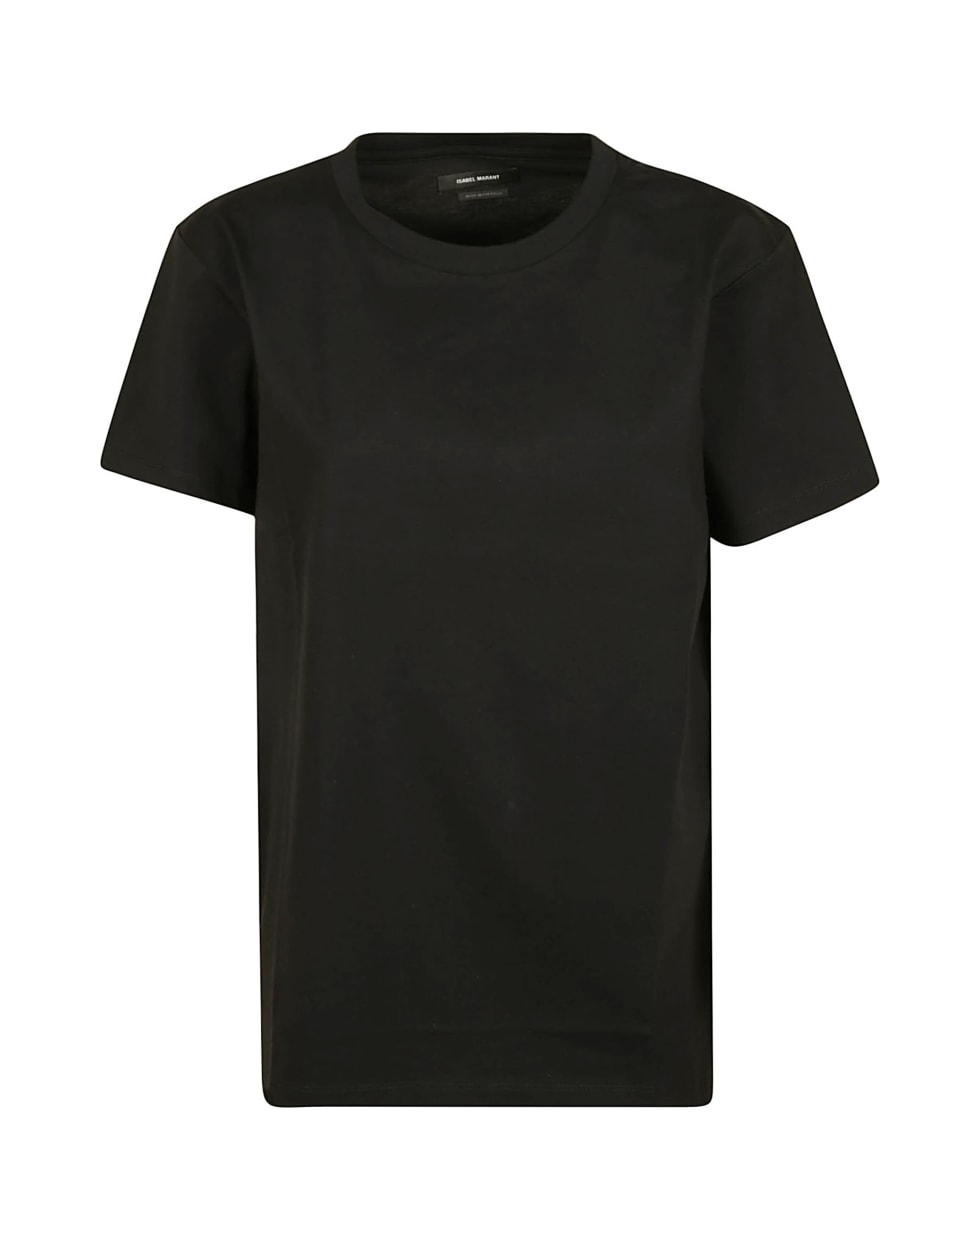 Isabel Marant Annax T-shirt - Black